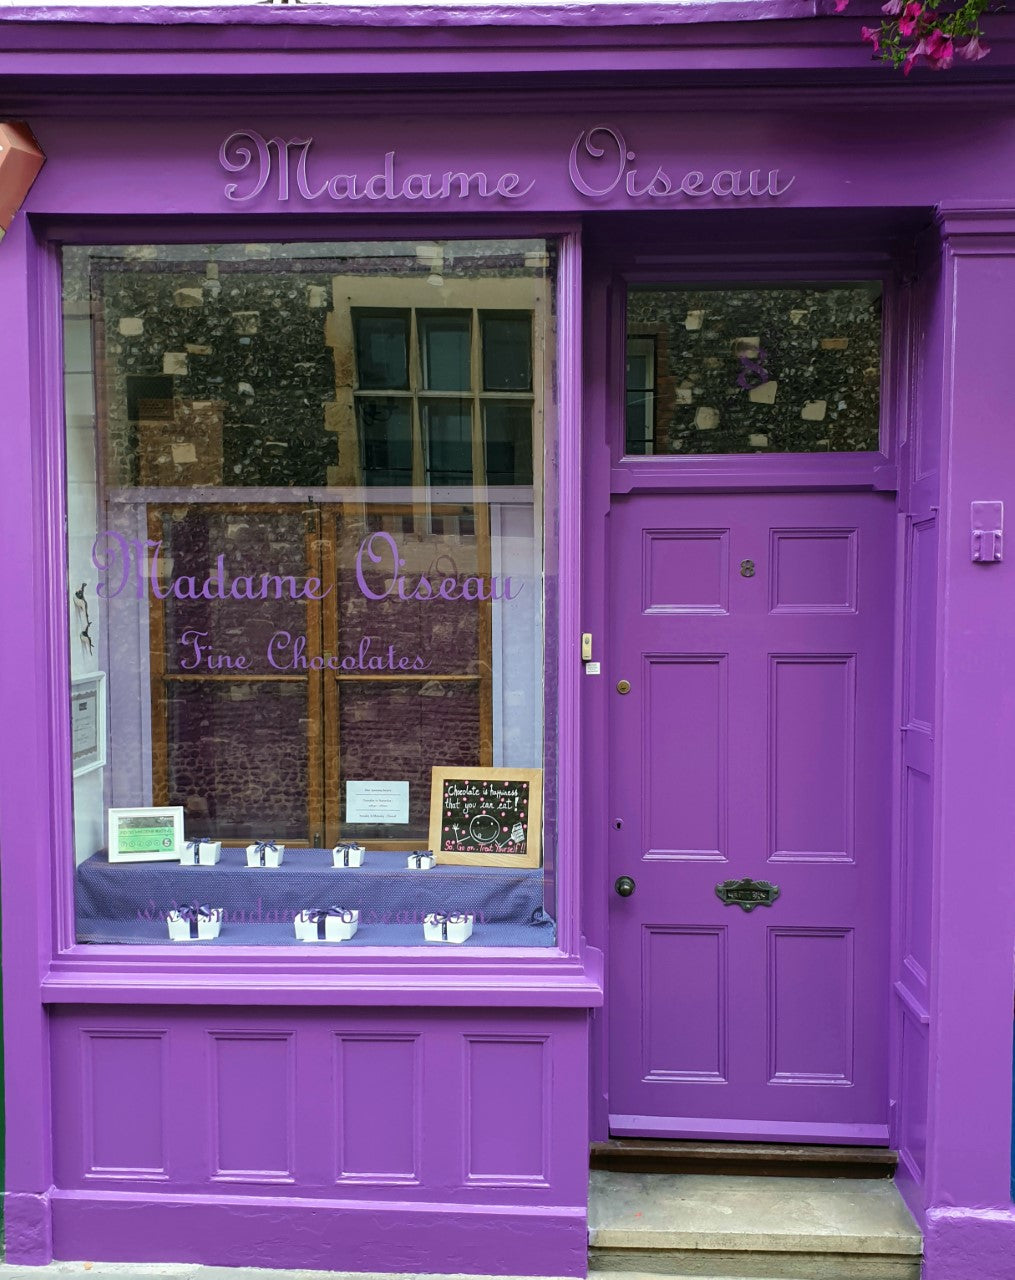 The purple chocolate shop